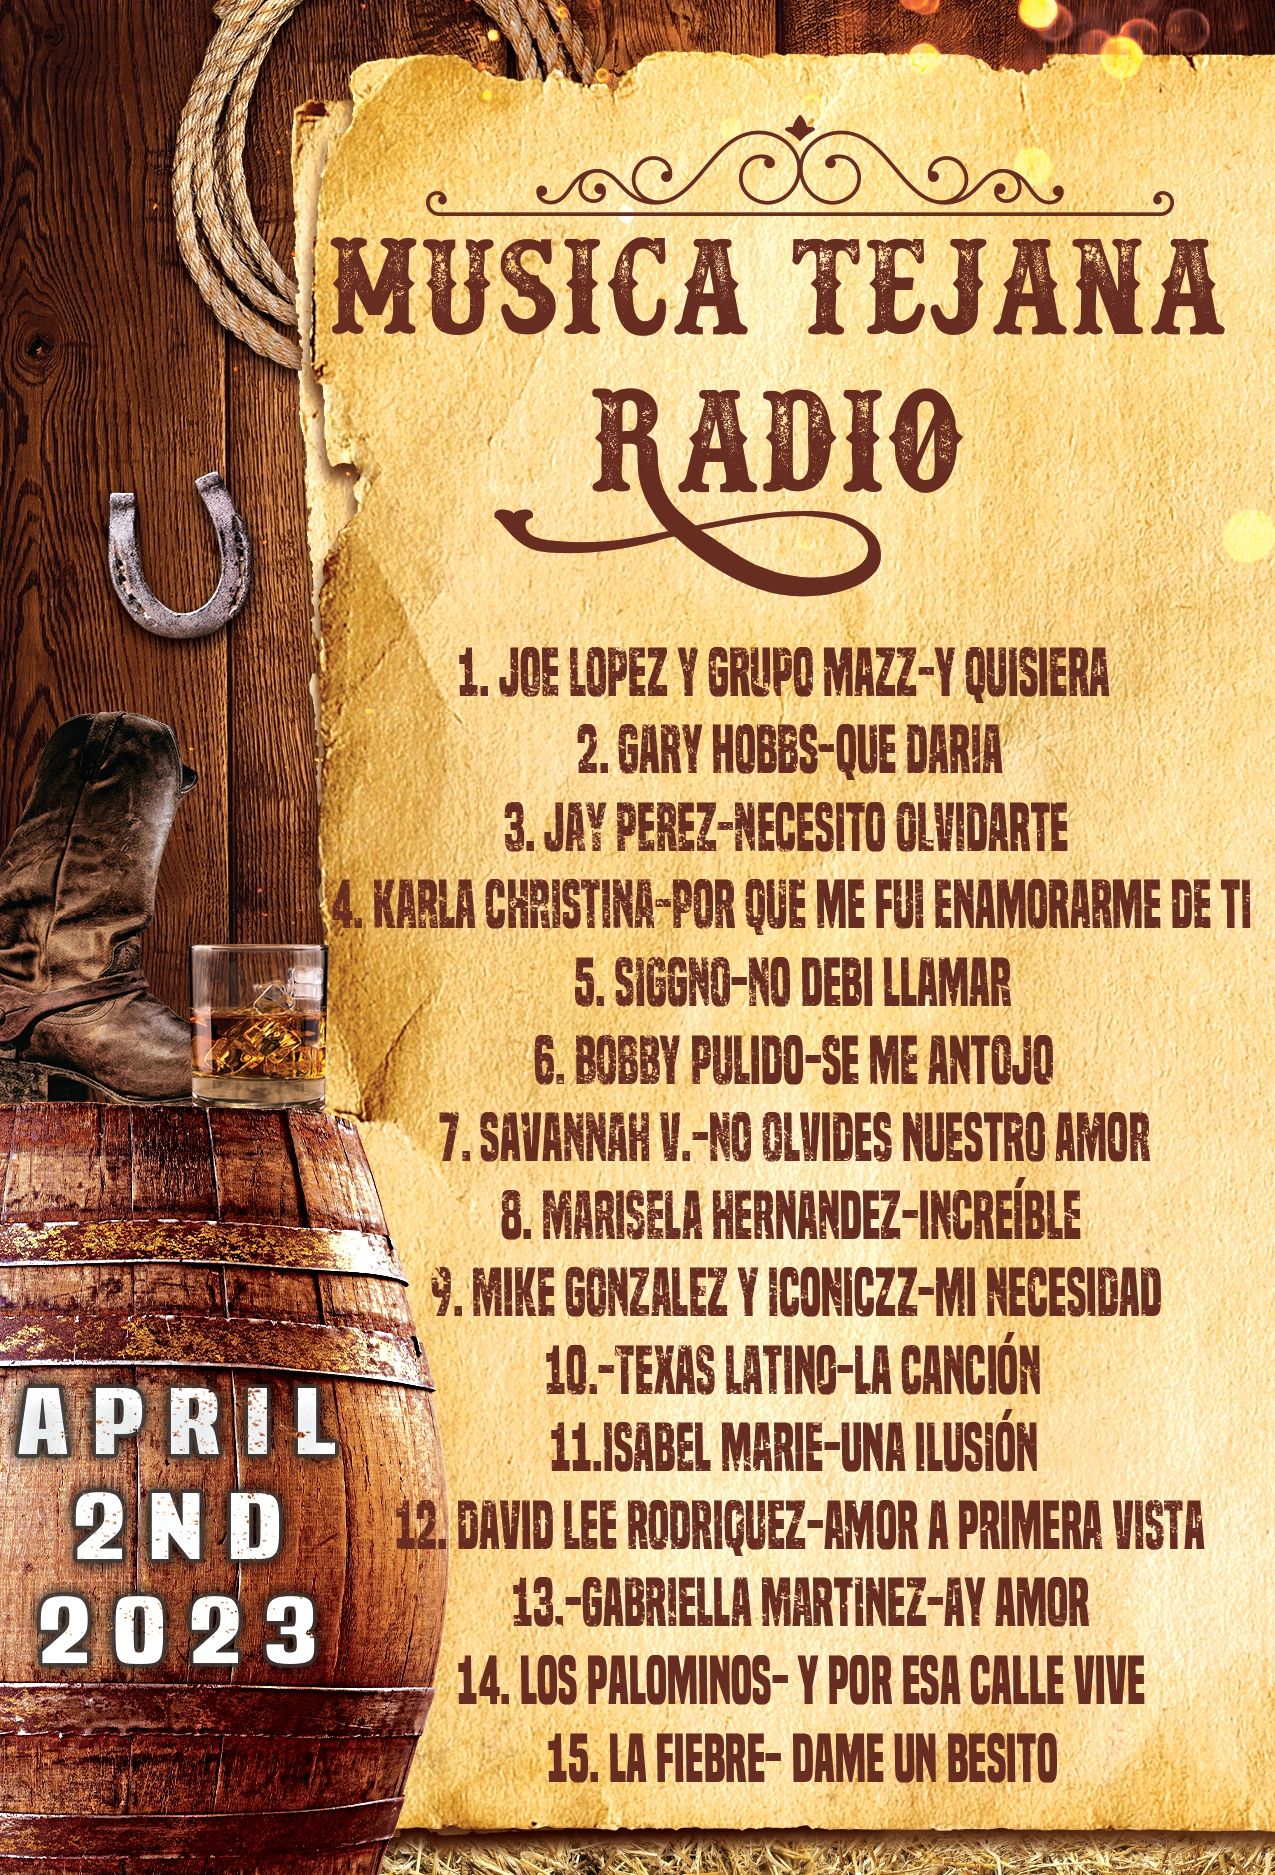 MUSICA TEJANA RADIO TOP 15 APRIL 2ND 2023